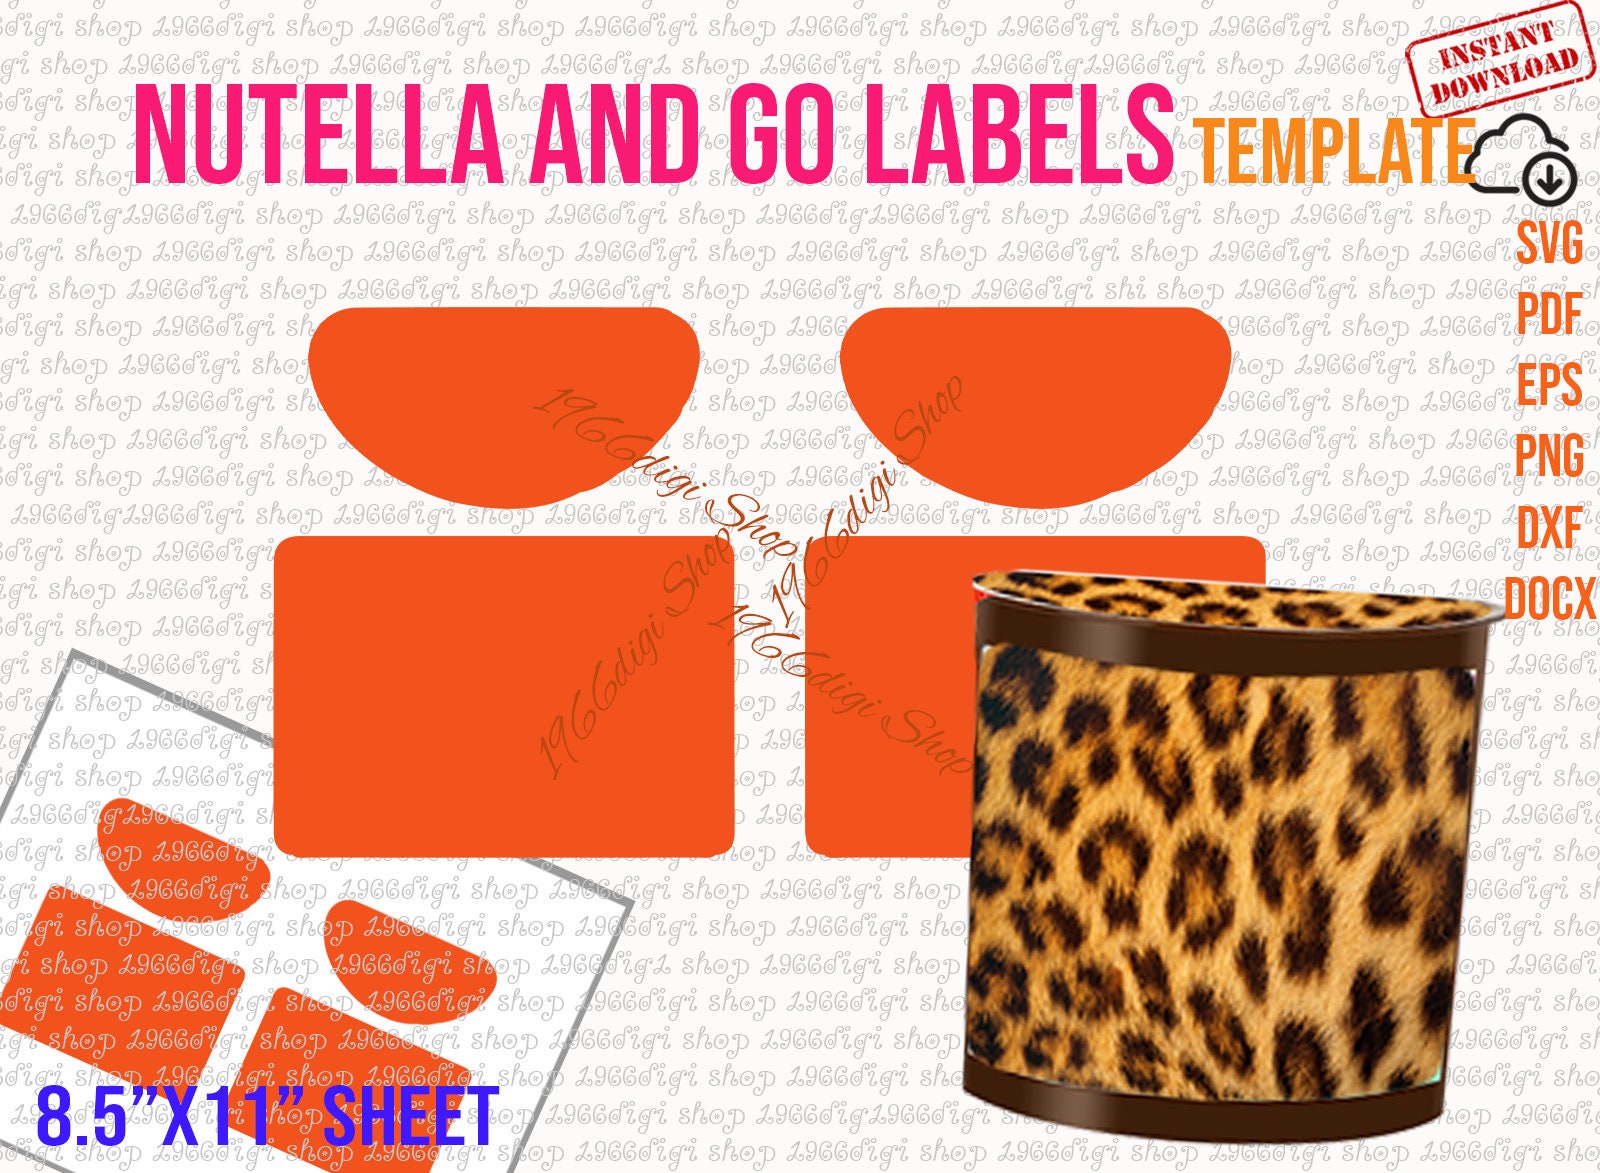 AMA Nutella Templates combo includes mini nutella 25g , Nutella and Go and  Nutella Blister template. -  España